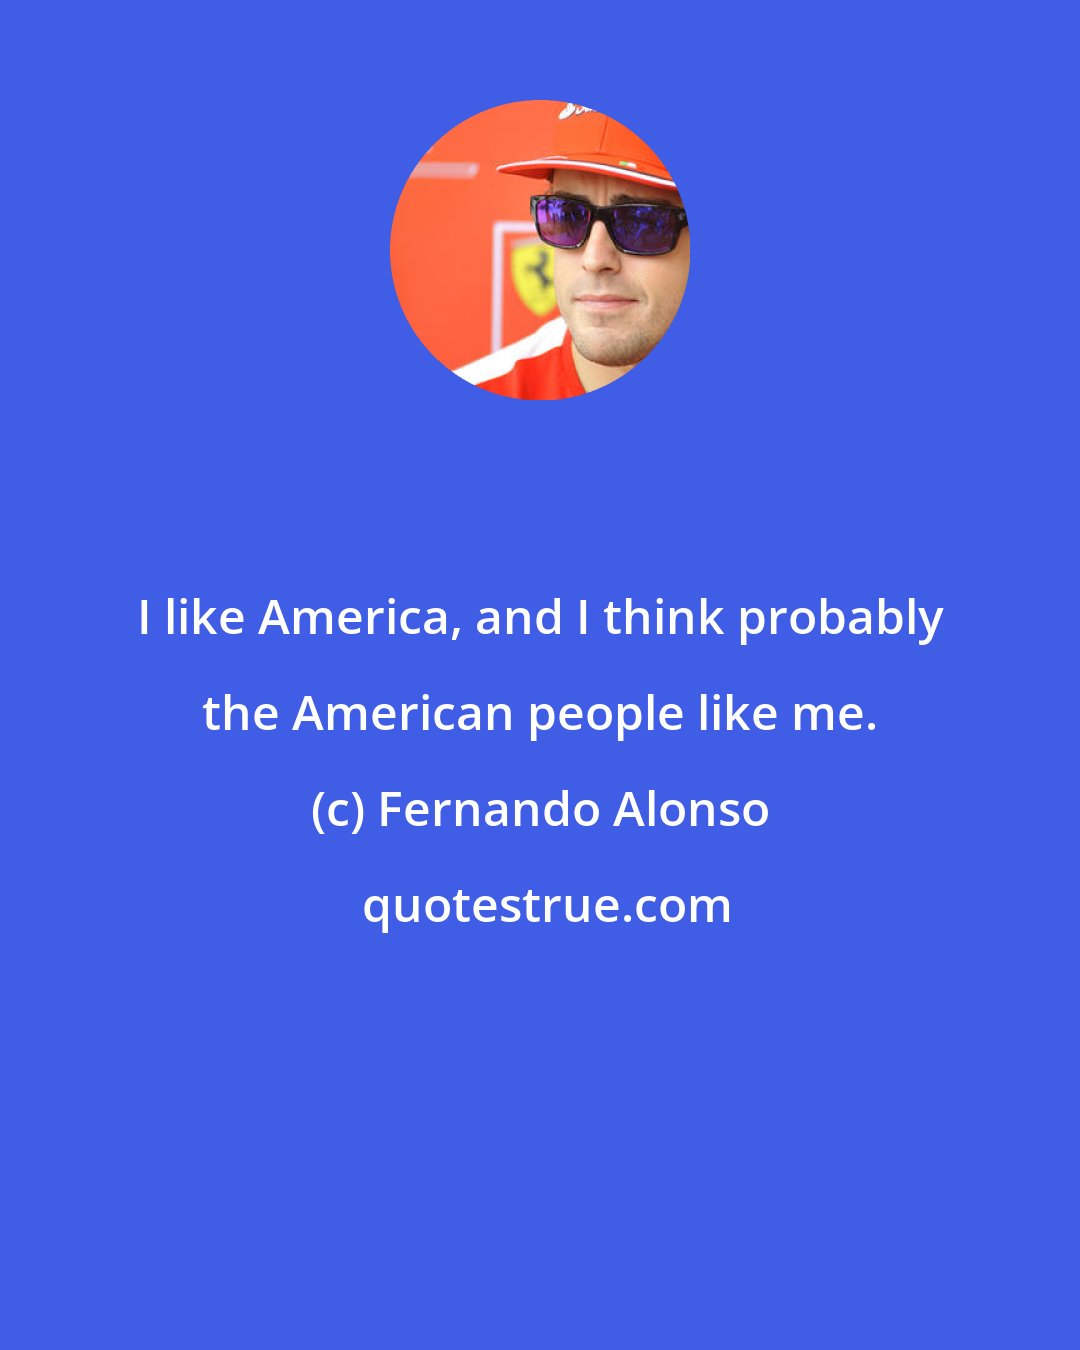 Fernando Alonso: I like America, and I think probably the American people like me.